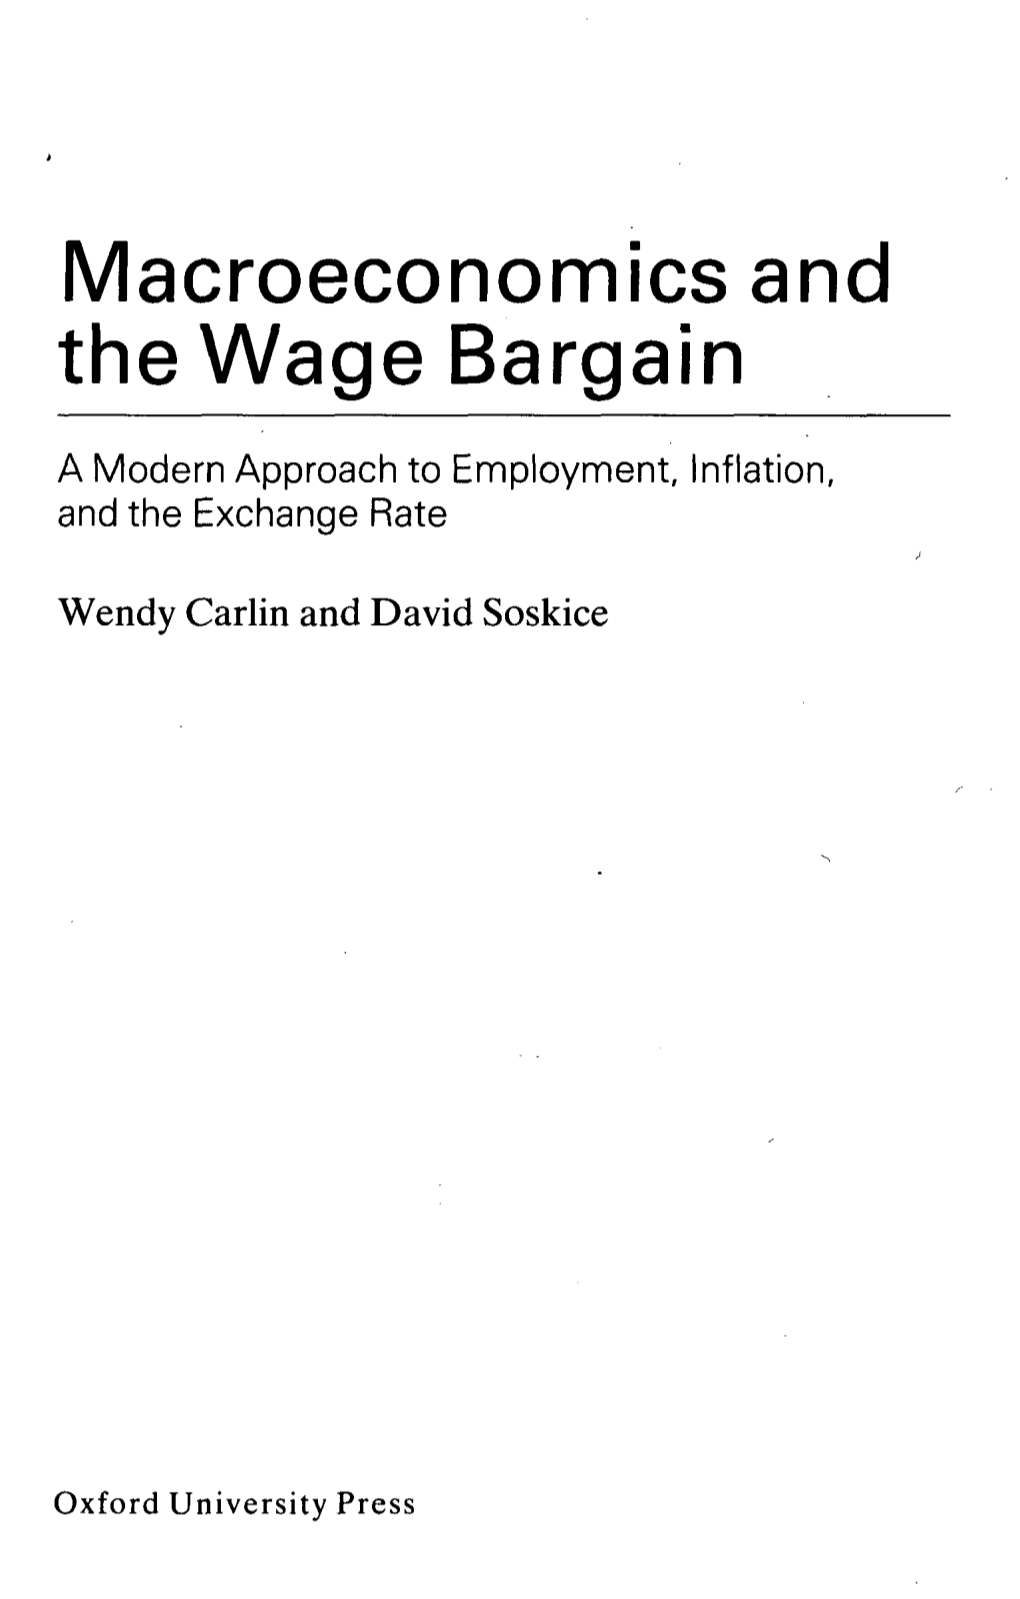 Macroeconomics and the Wage Bargain